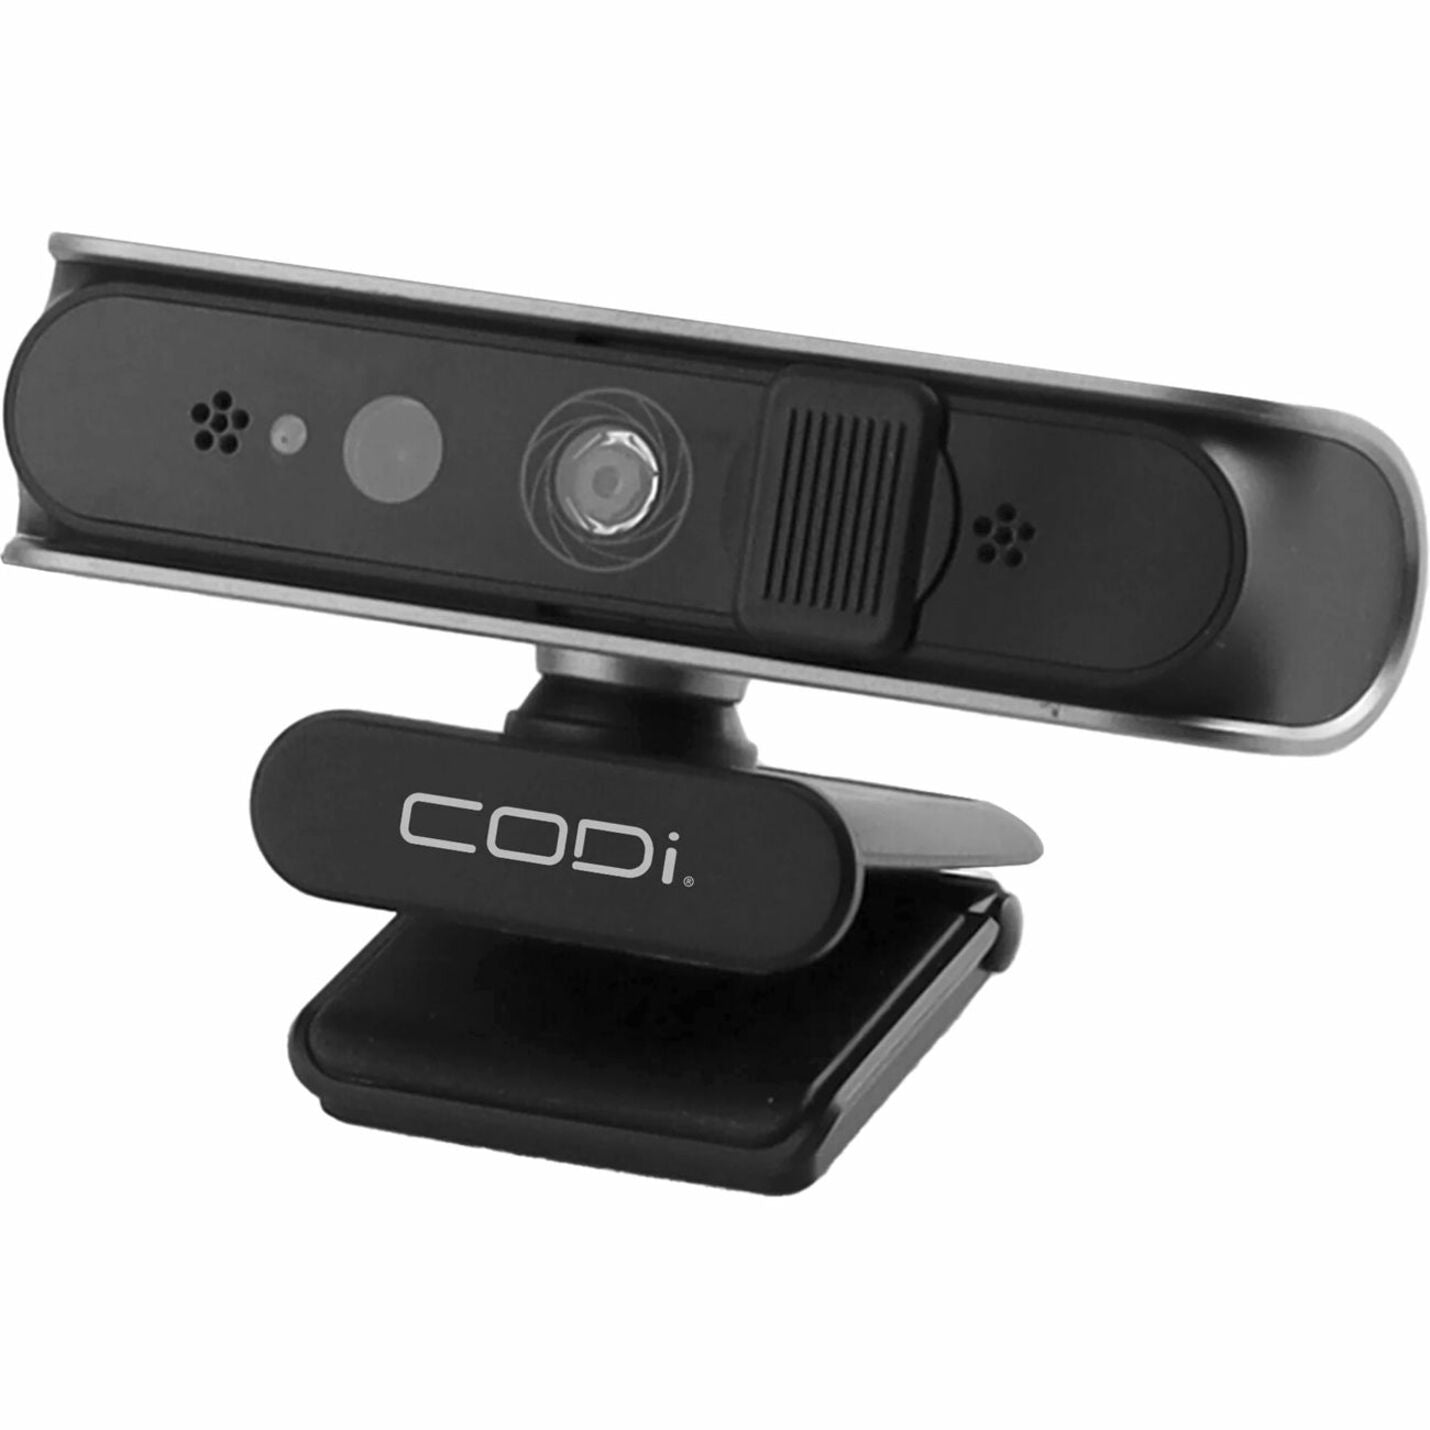 CODi A05023 Allocco 1080P IR Facial Recognition Webcam, 30 fps, Black, USB Type A